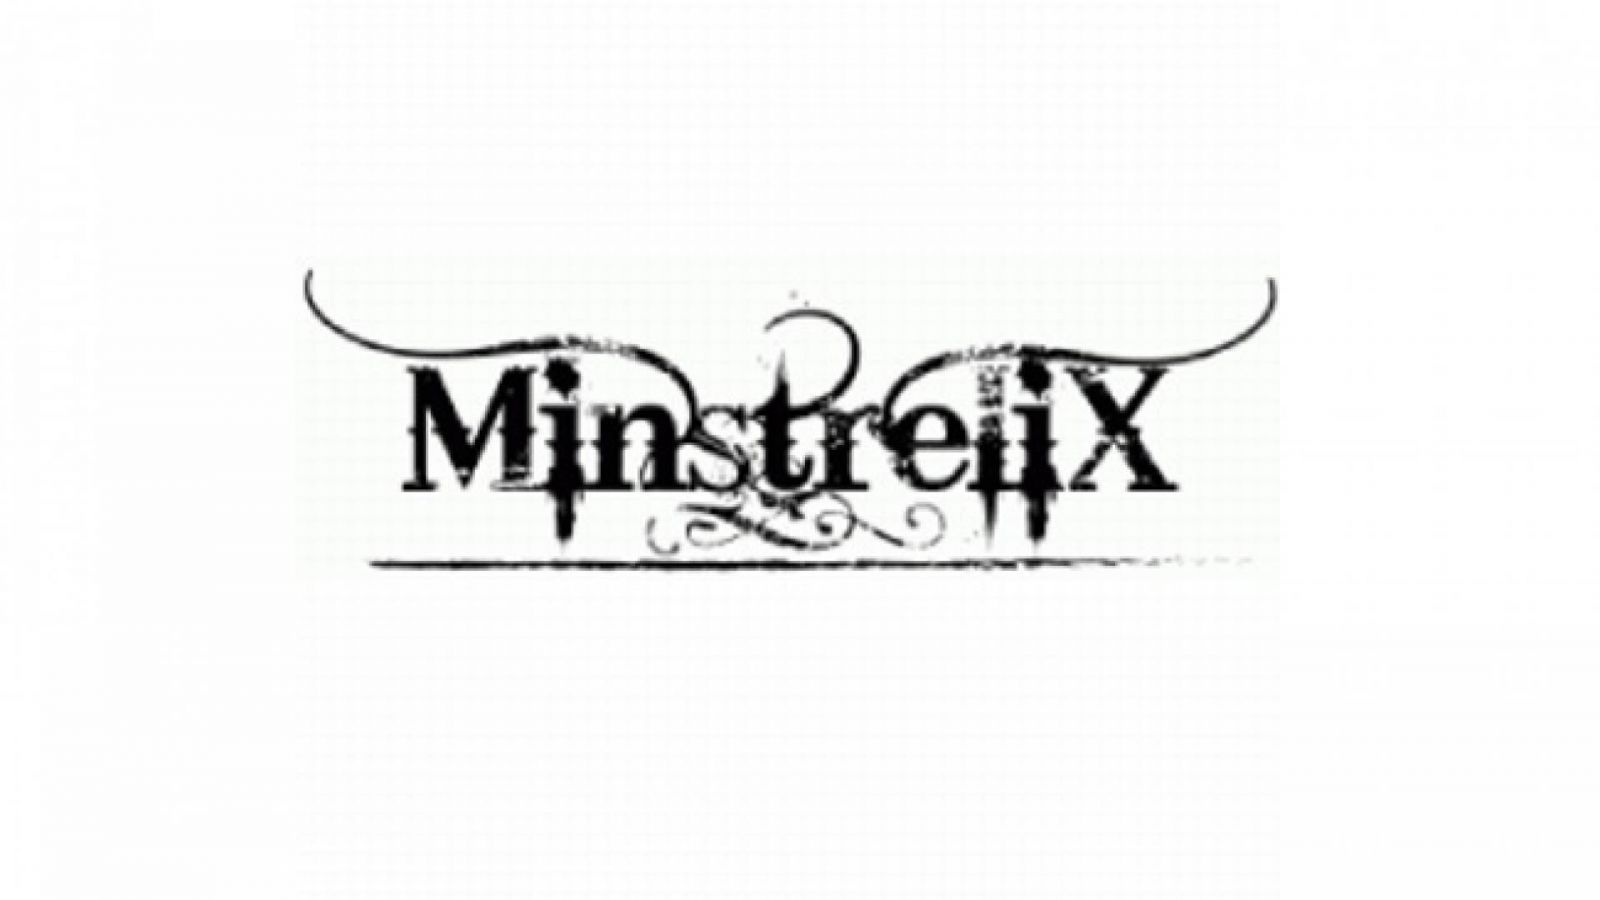 MinstreliX © MinstreliX. All rights reserved.